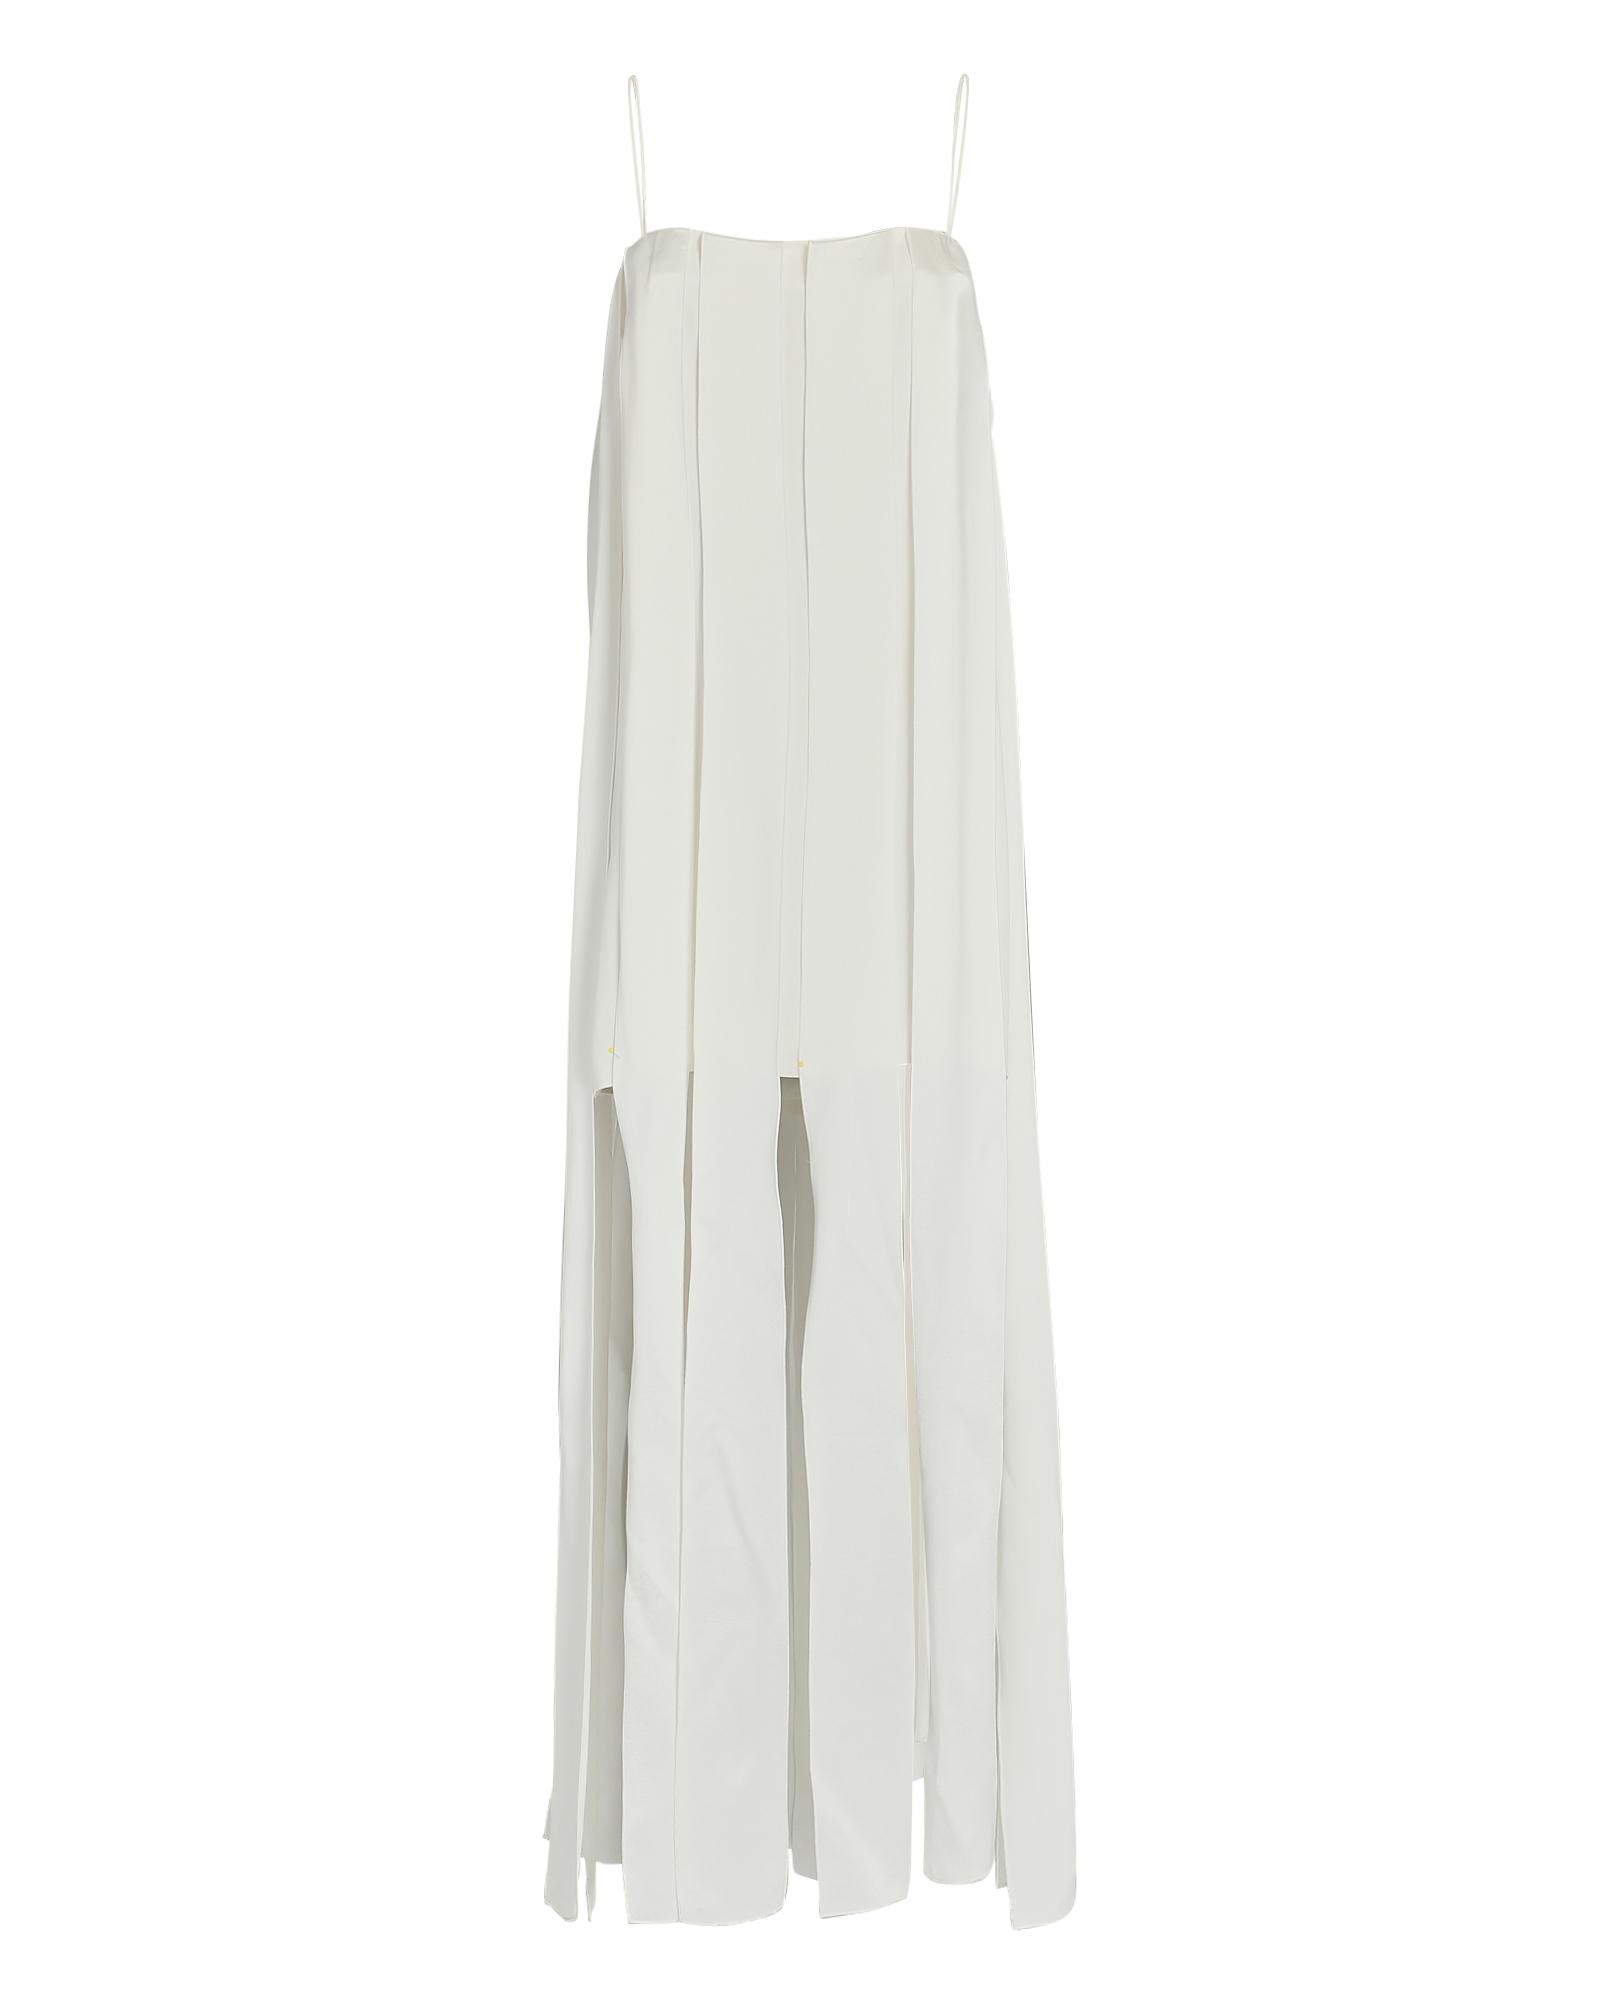 Alexis Colle Fringe Crepe Midi Dress in White | Lyst